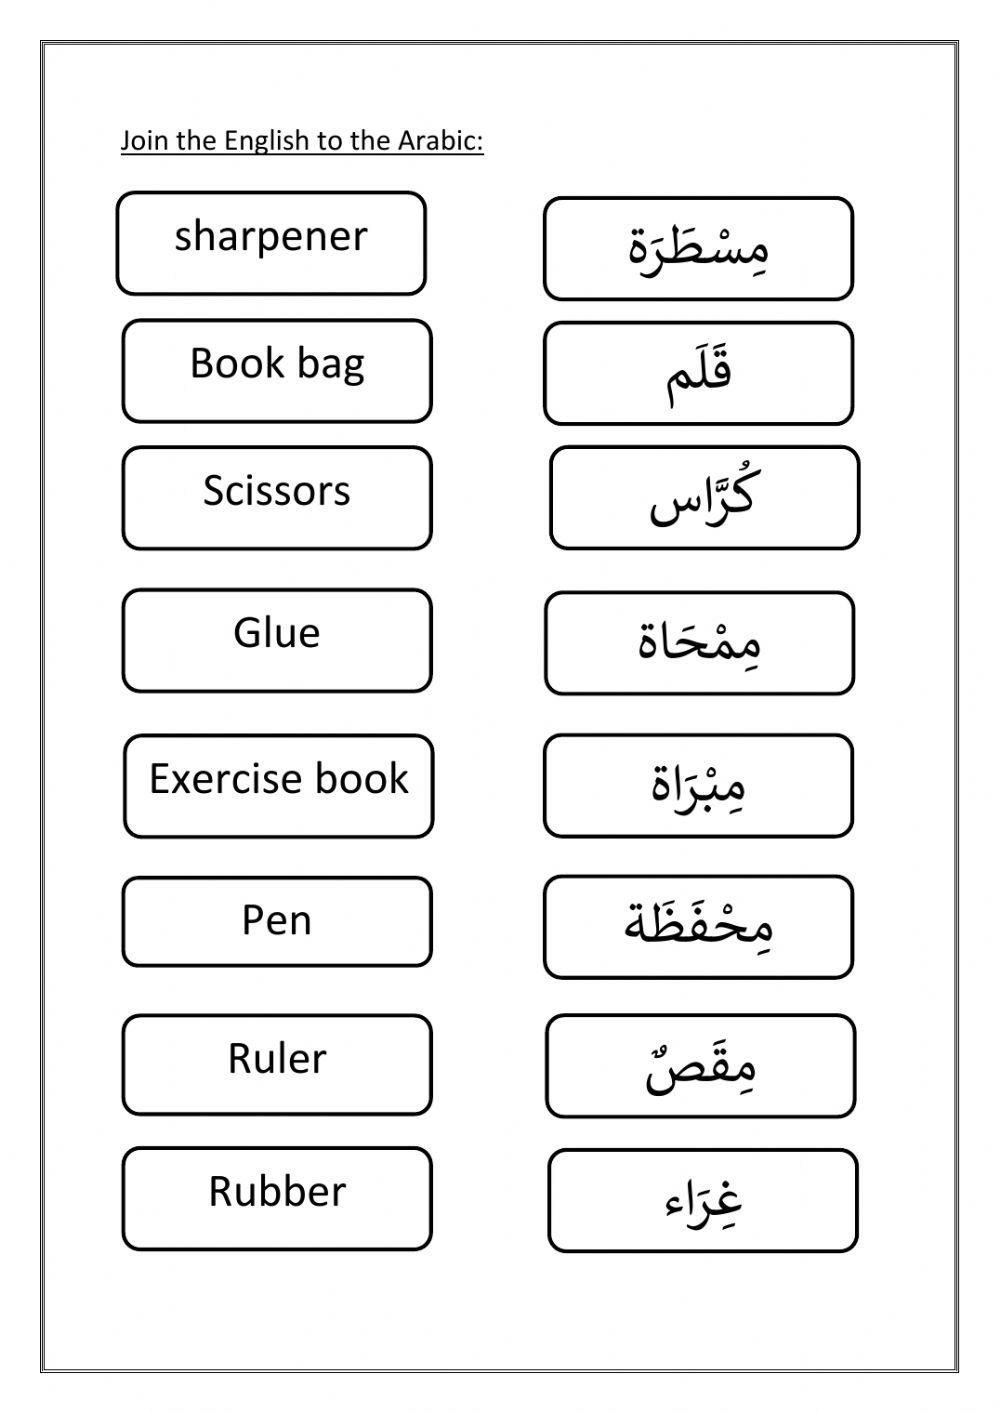 School equipment English and Arabic